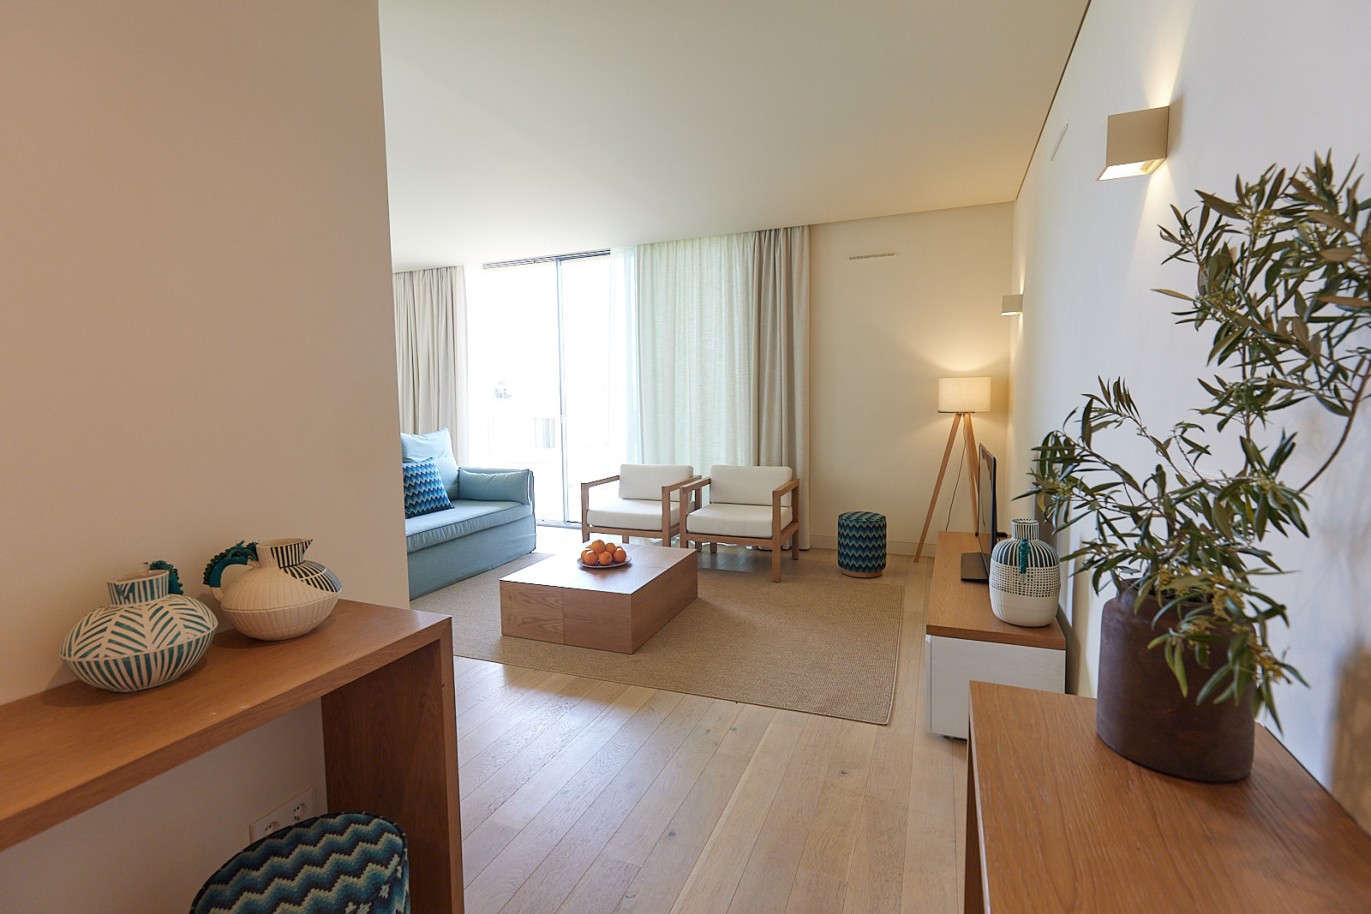 2 bedroom apartment in resort, for sale in Porches, Algarve_228893